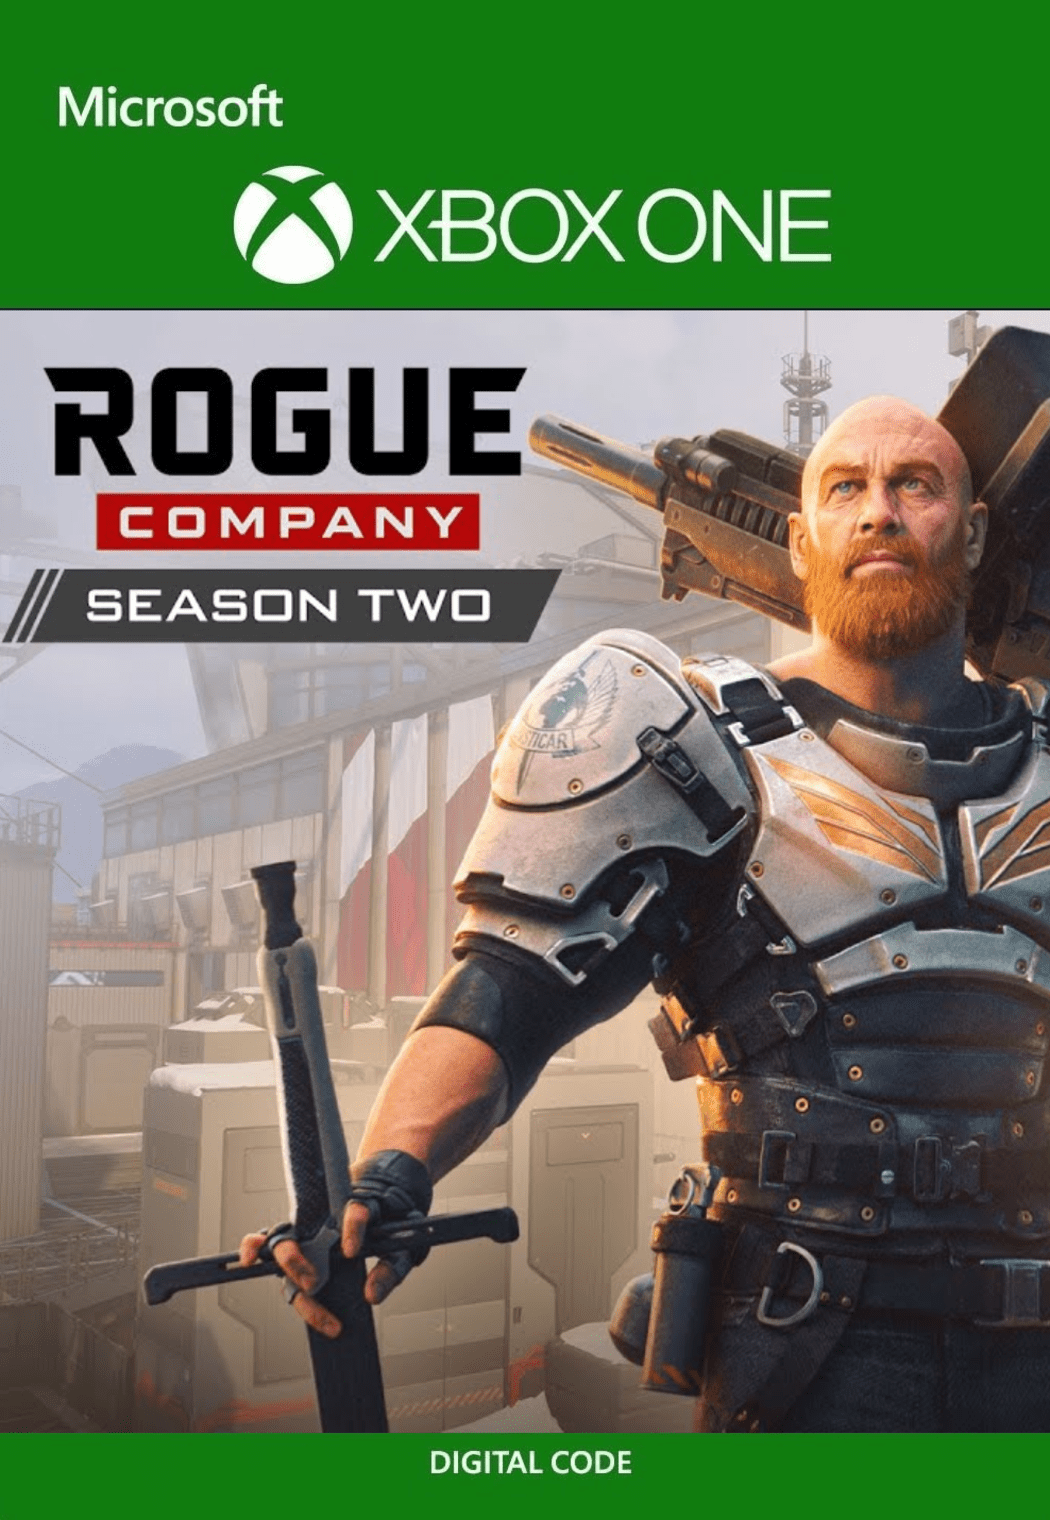 Rogue Company: shooter cooperativo mostra seu gameplay e